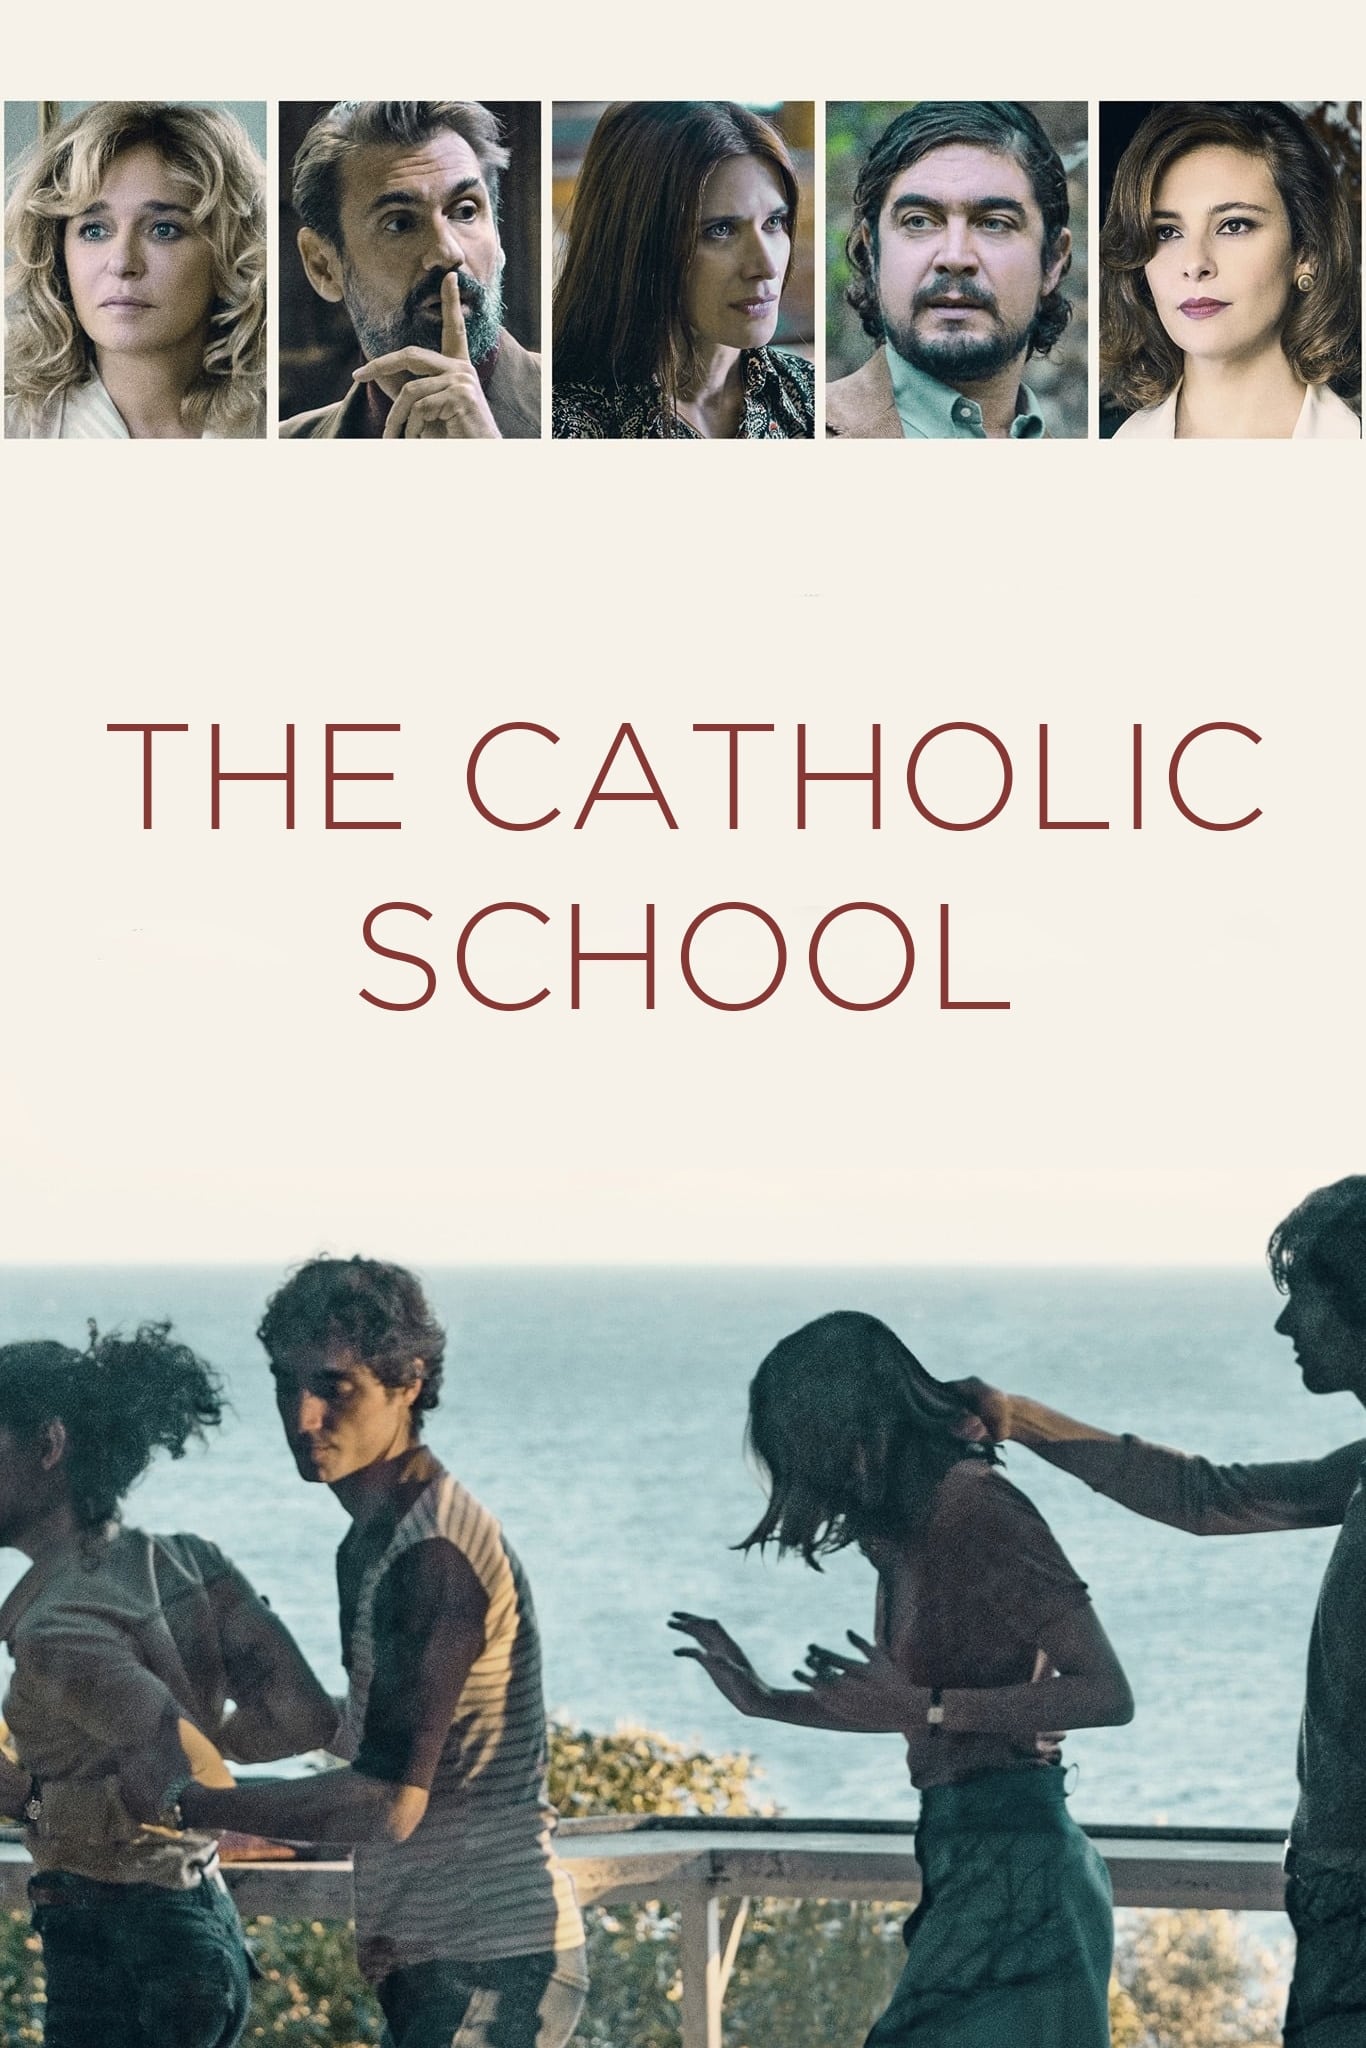 Is “The Catholic School” on Netflix